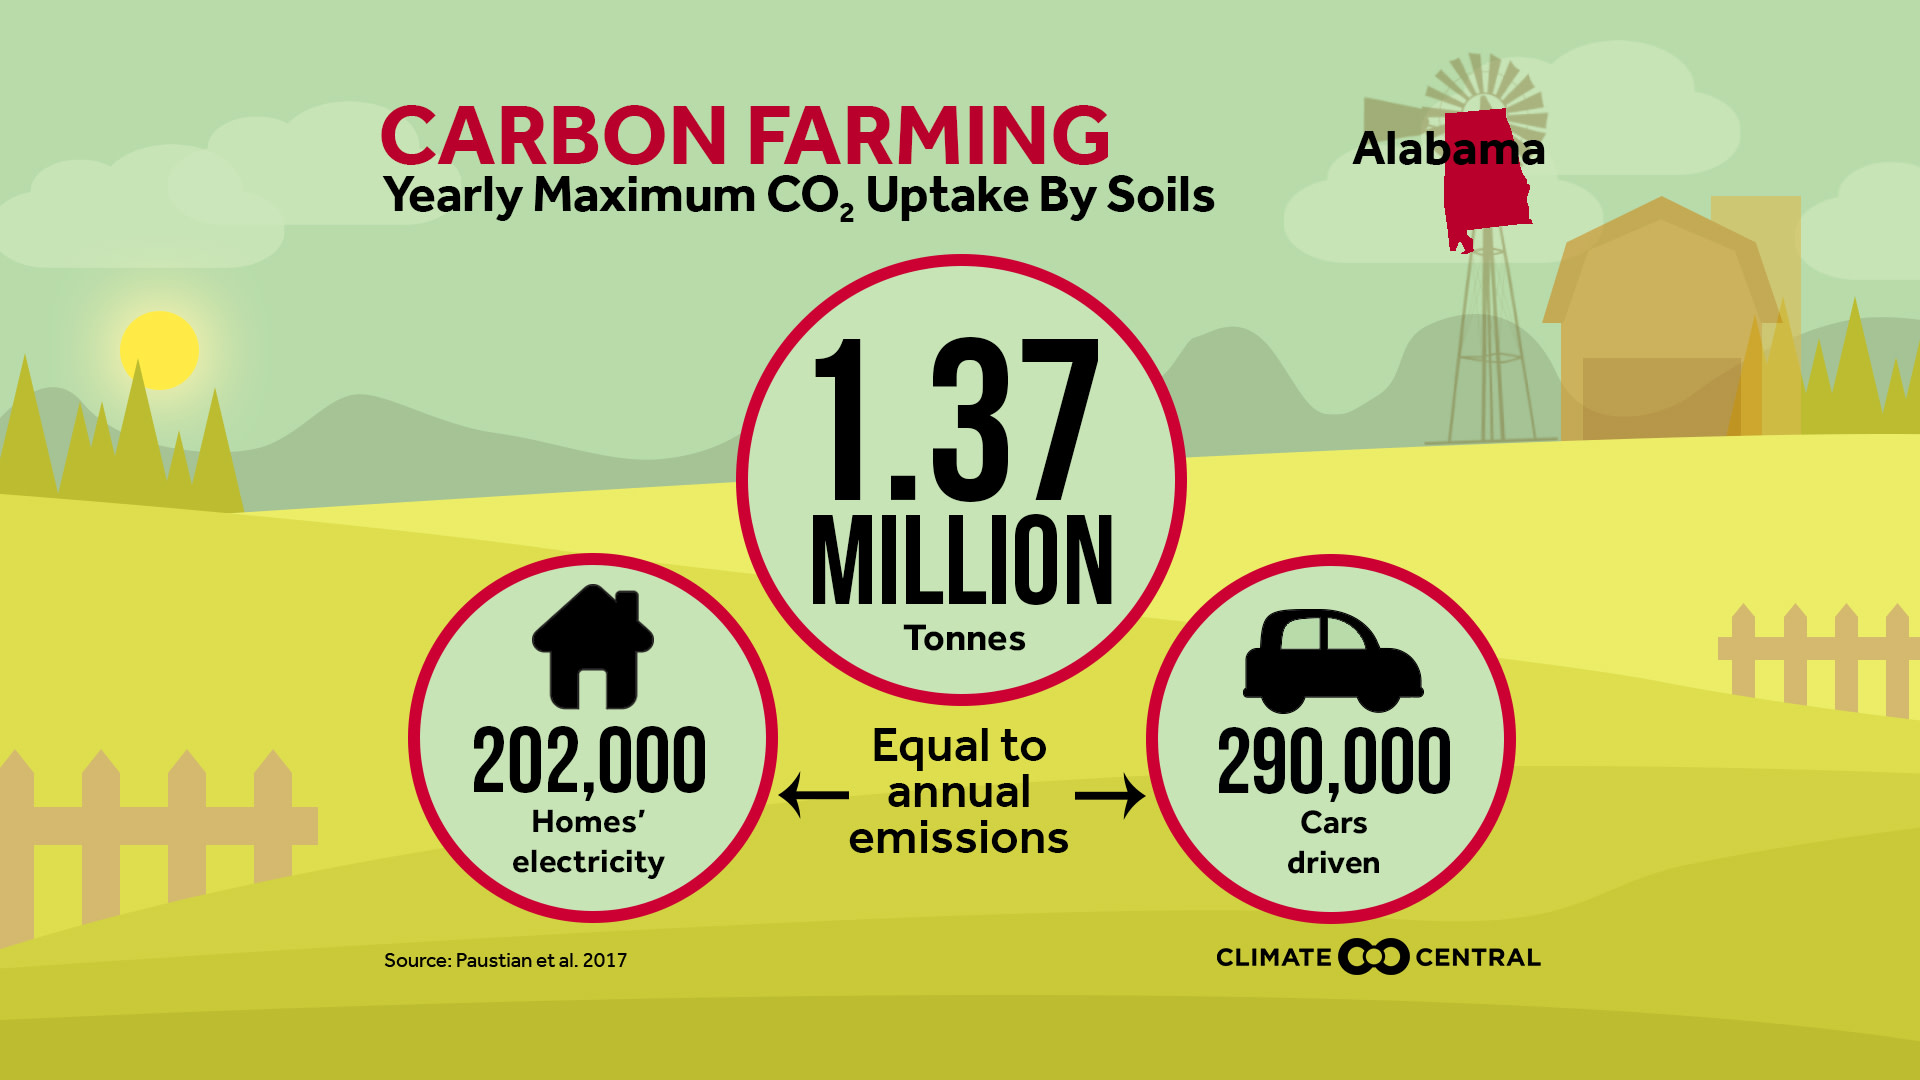 State - Carbon Saving Farming Practices